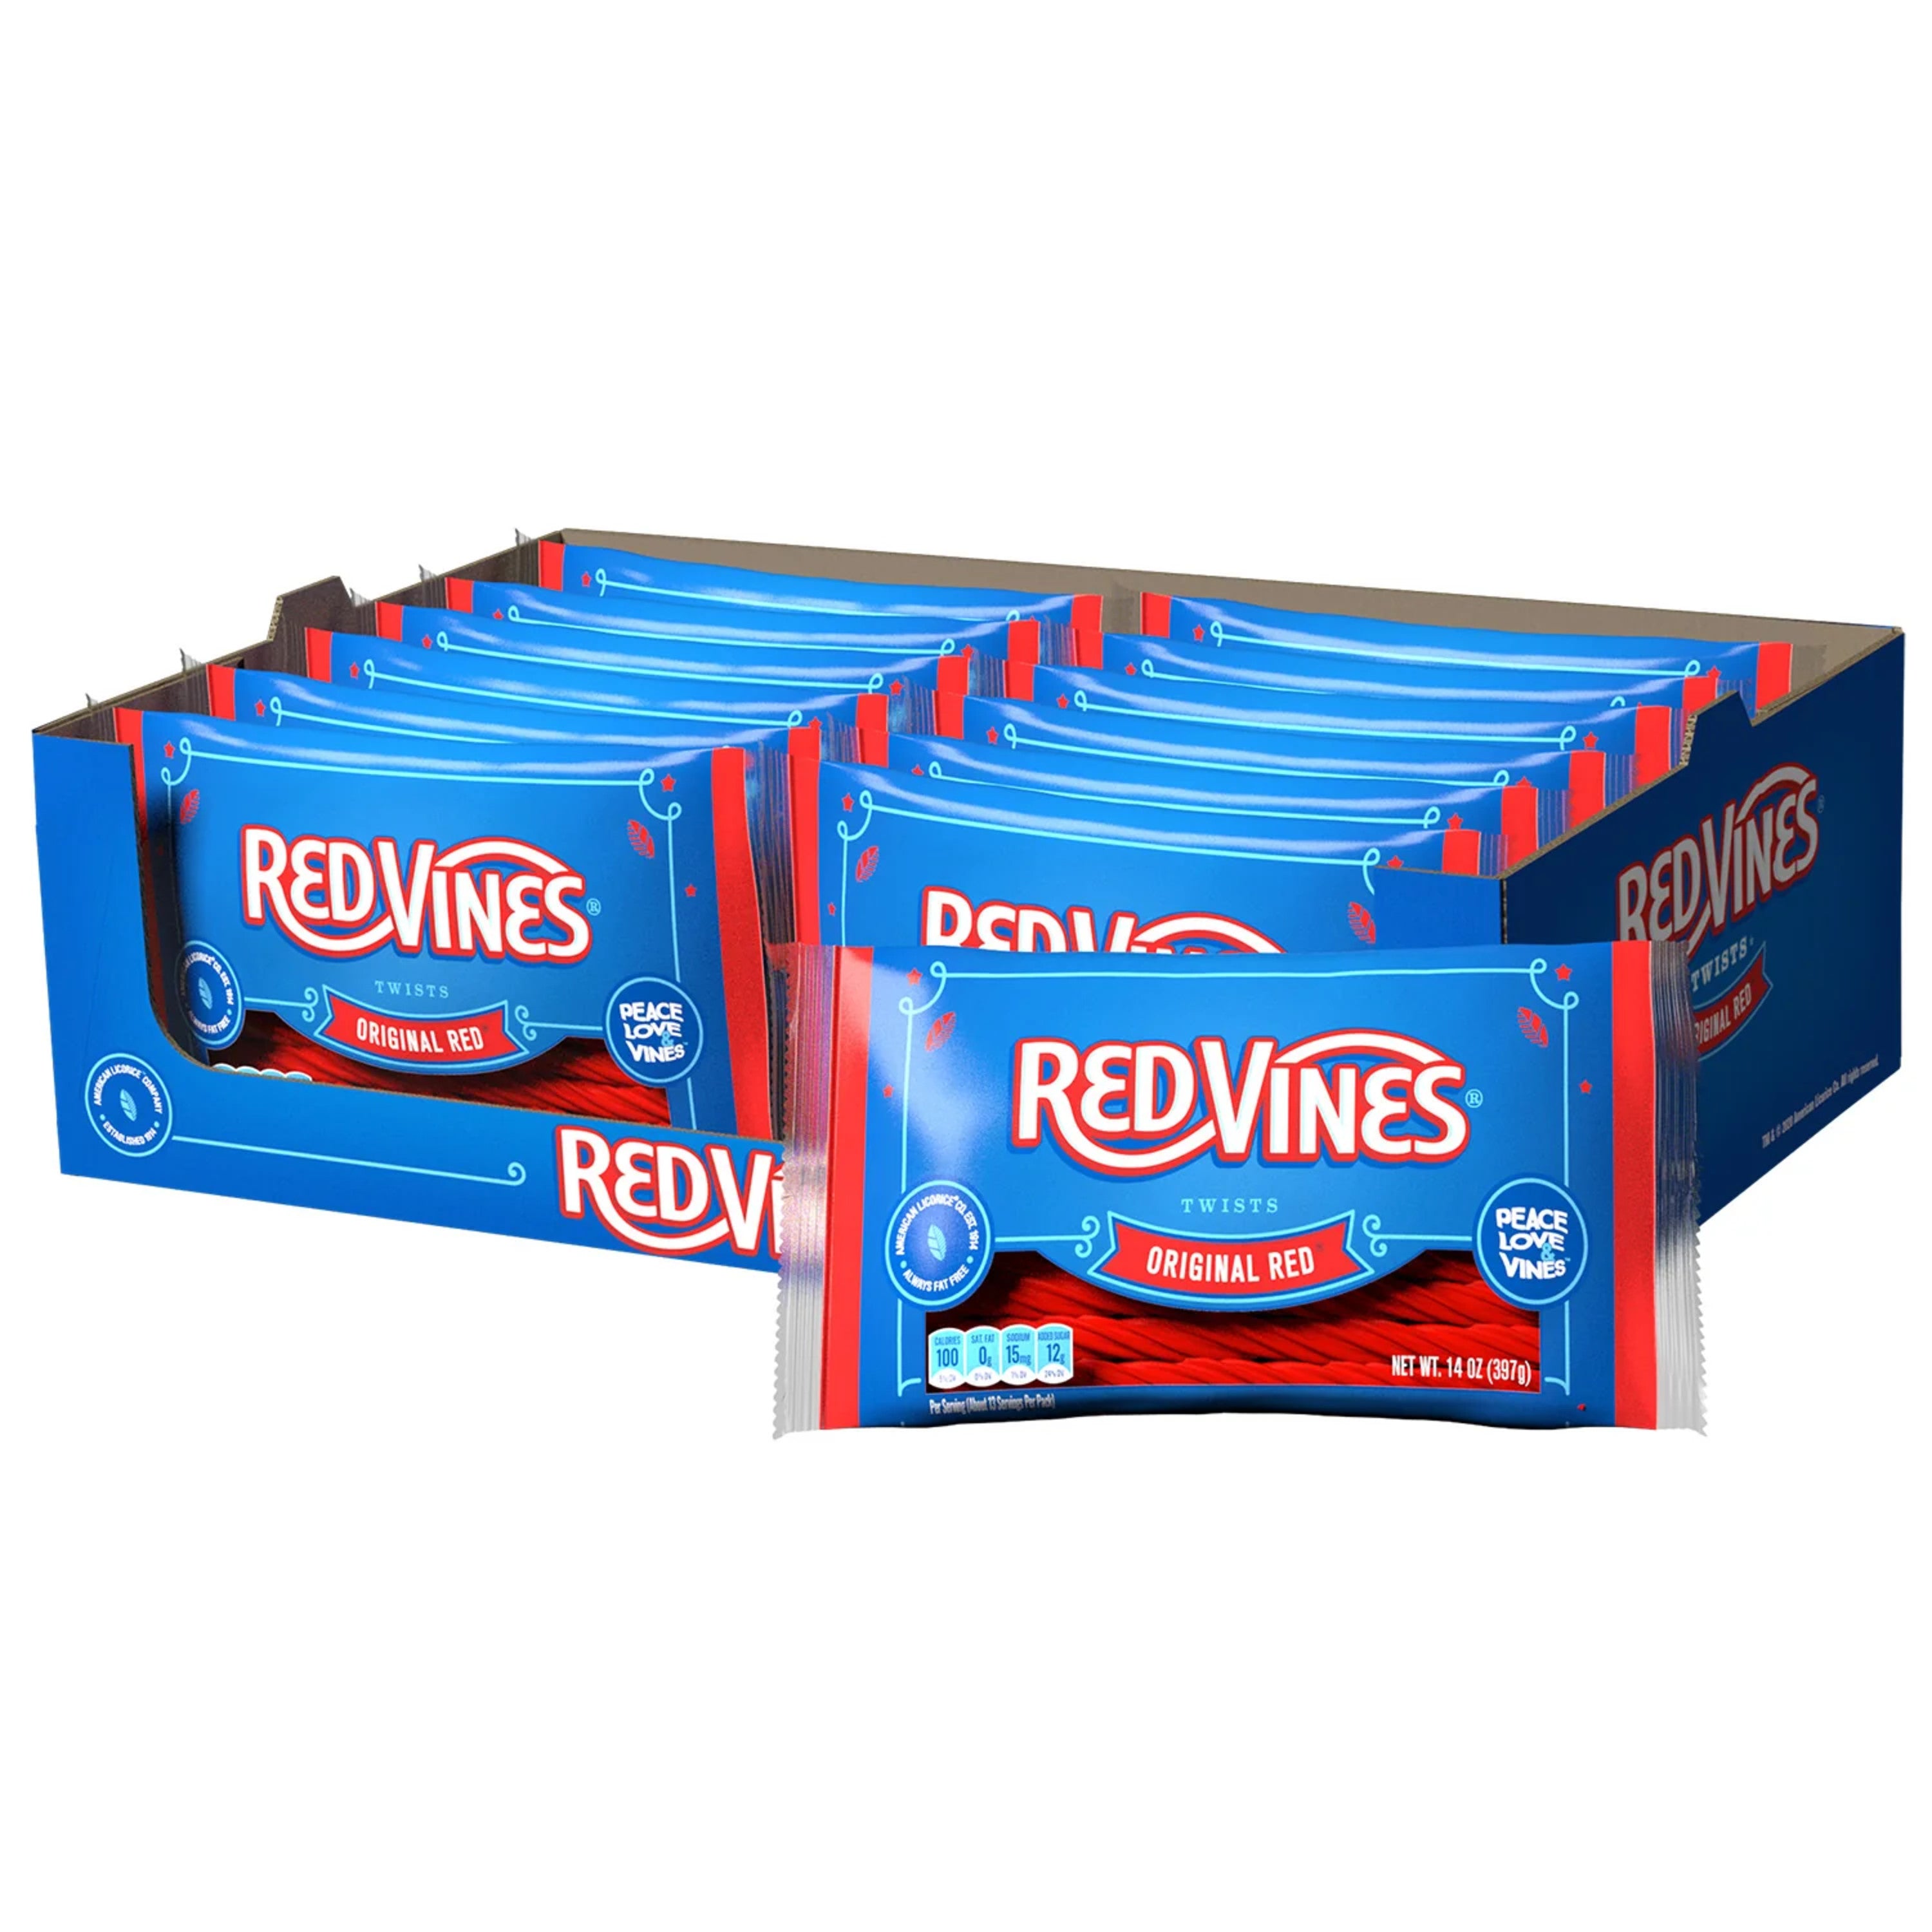 12 pack case of Red Vines Original Red Twists in 14oz bag